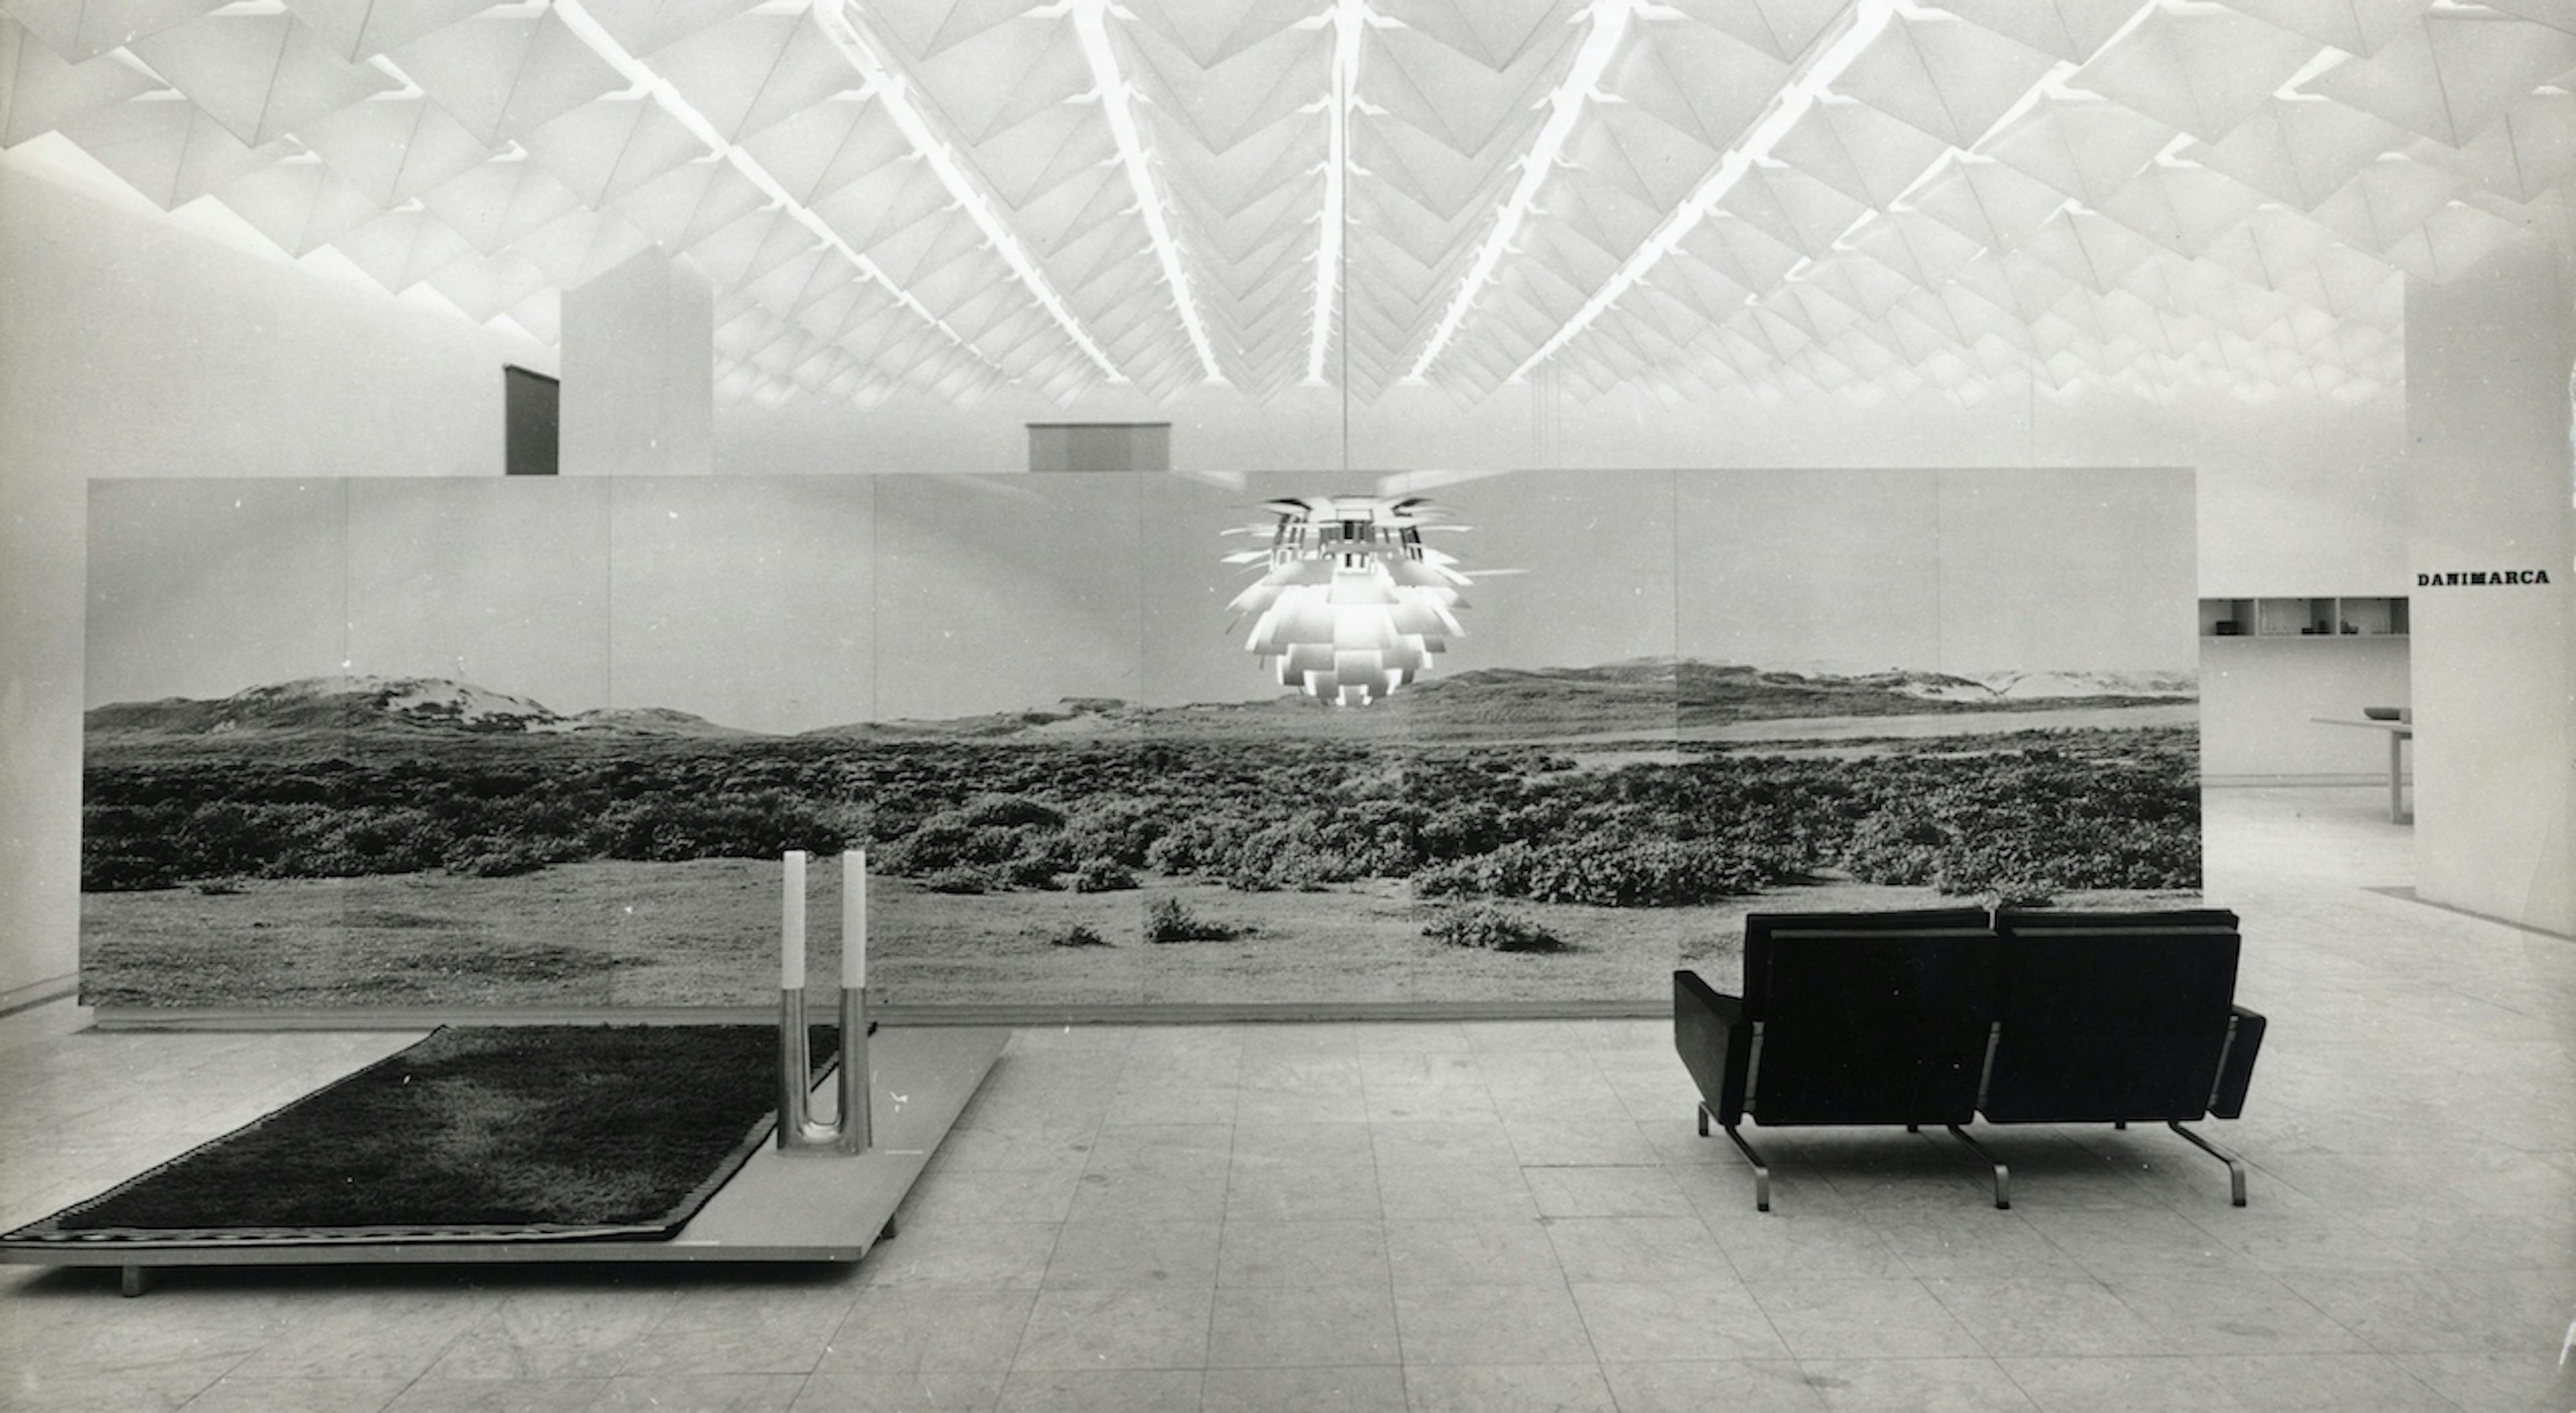 XII Triennale - Sezione della Danimarca - Sezione della Danimarca, proegtto dell'allestimento dell'architetto Poul Kjaerholm, 1960 © Publifoto